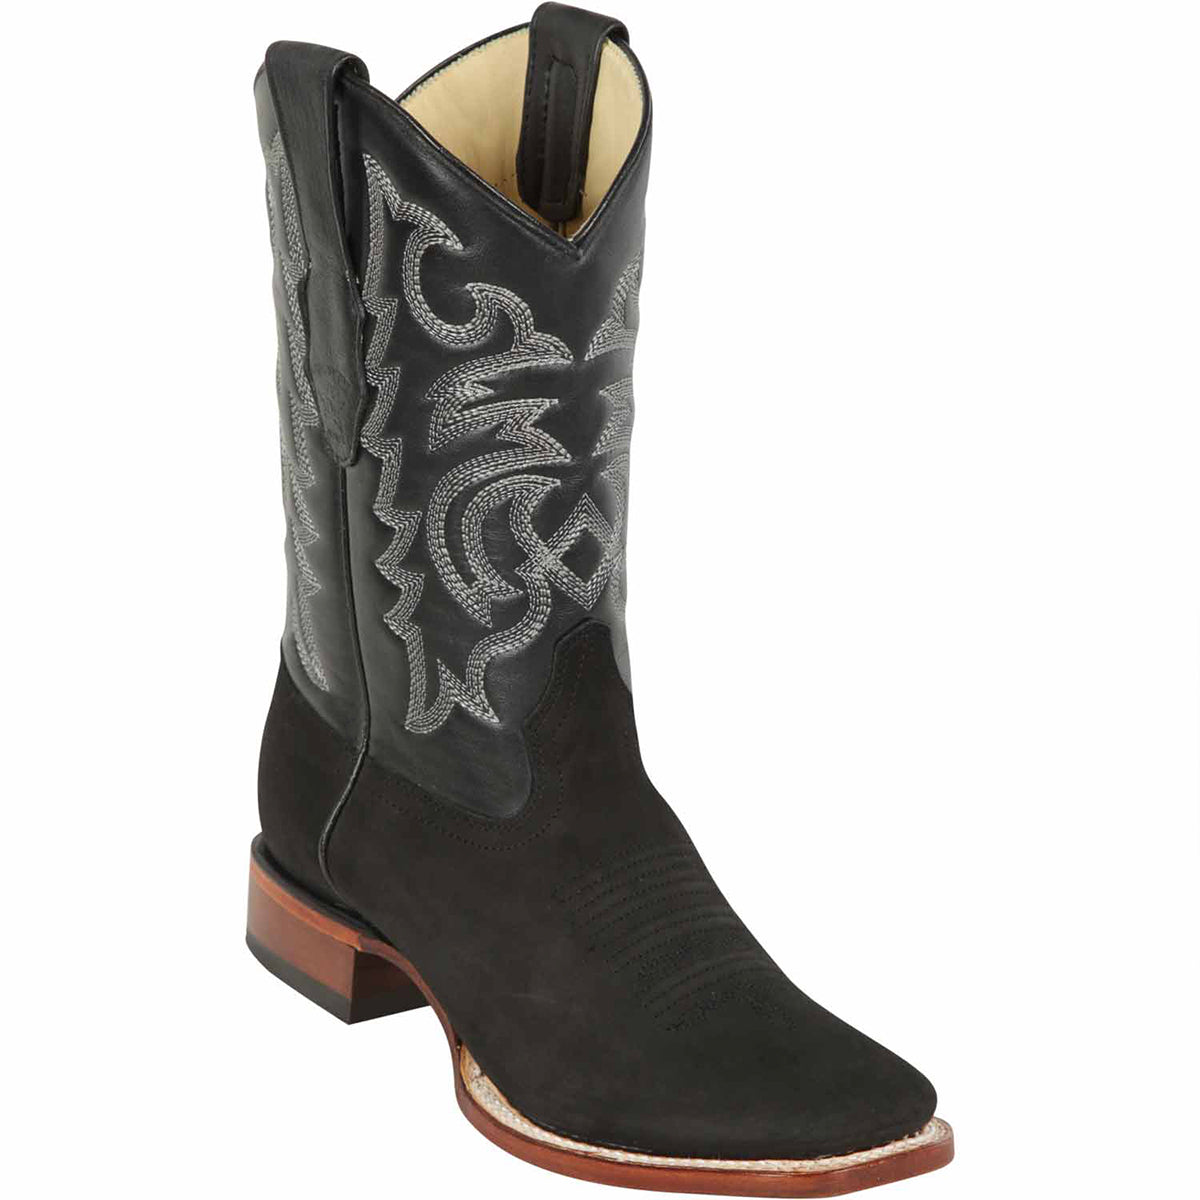 The Versatility of Black Cowboy Boots